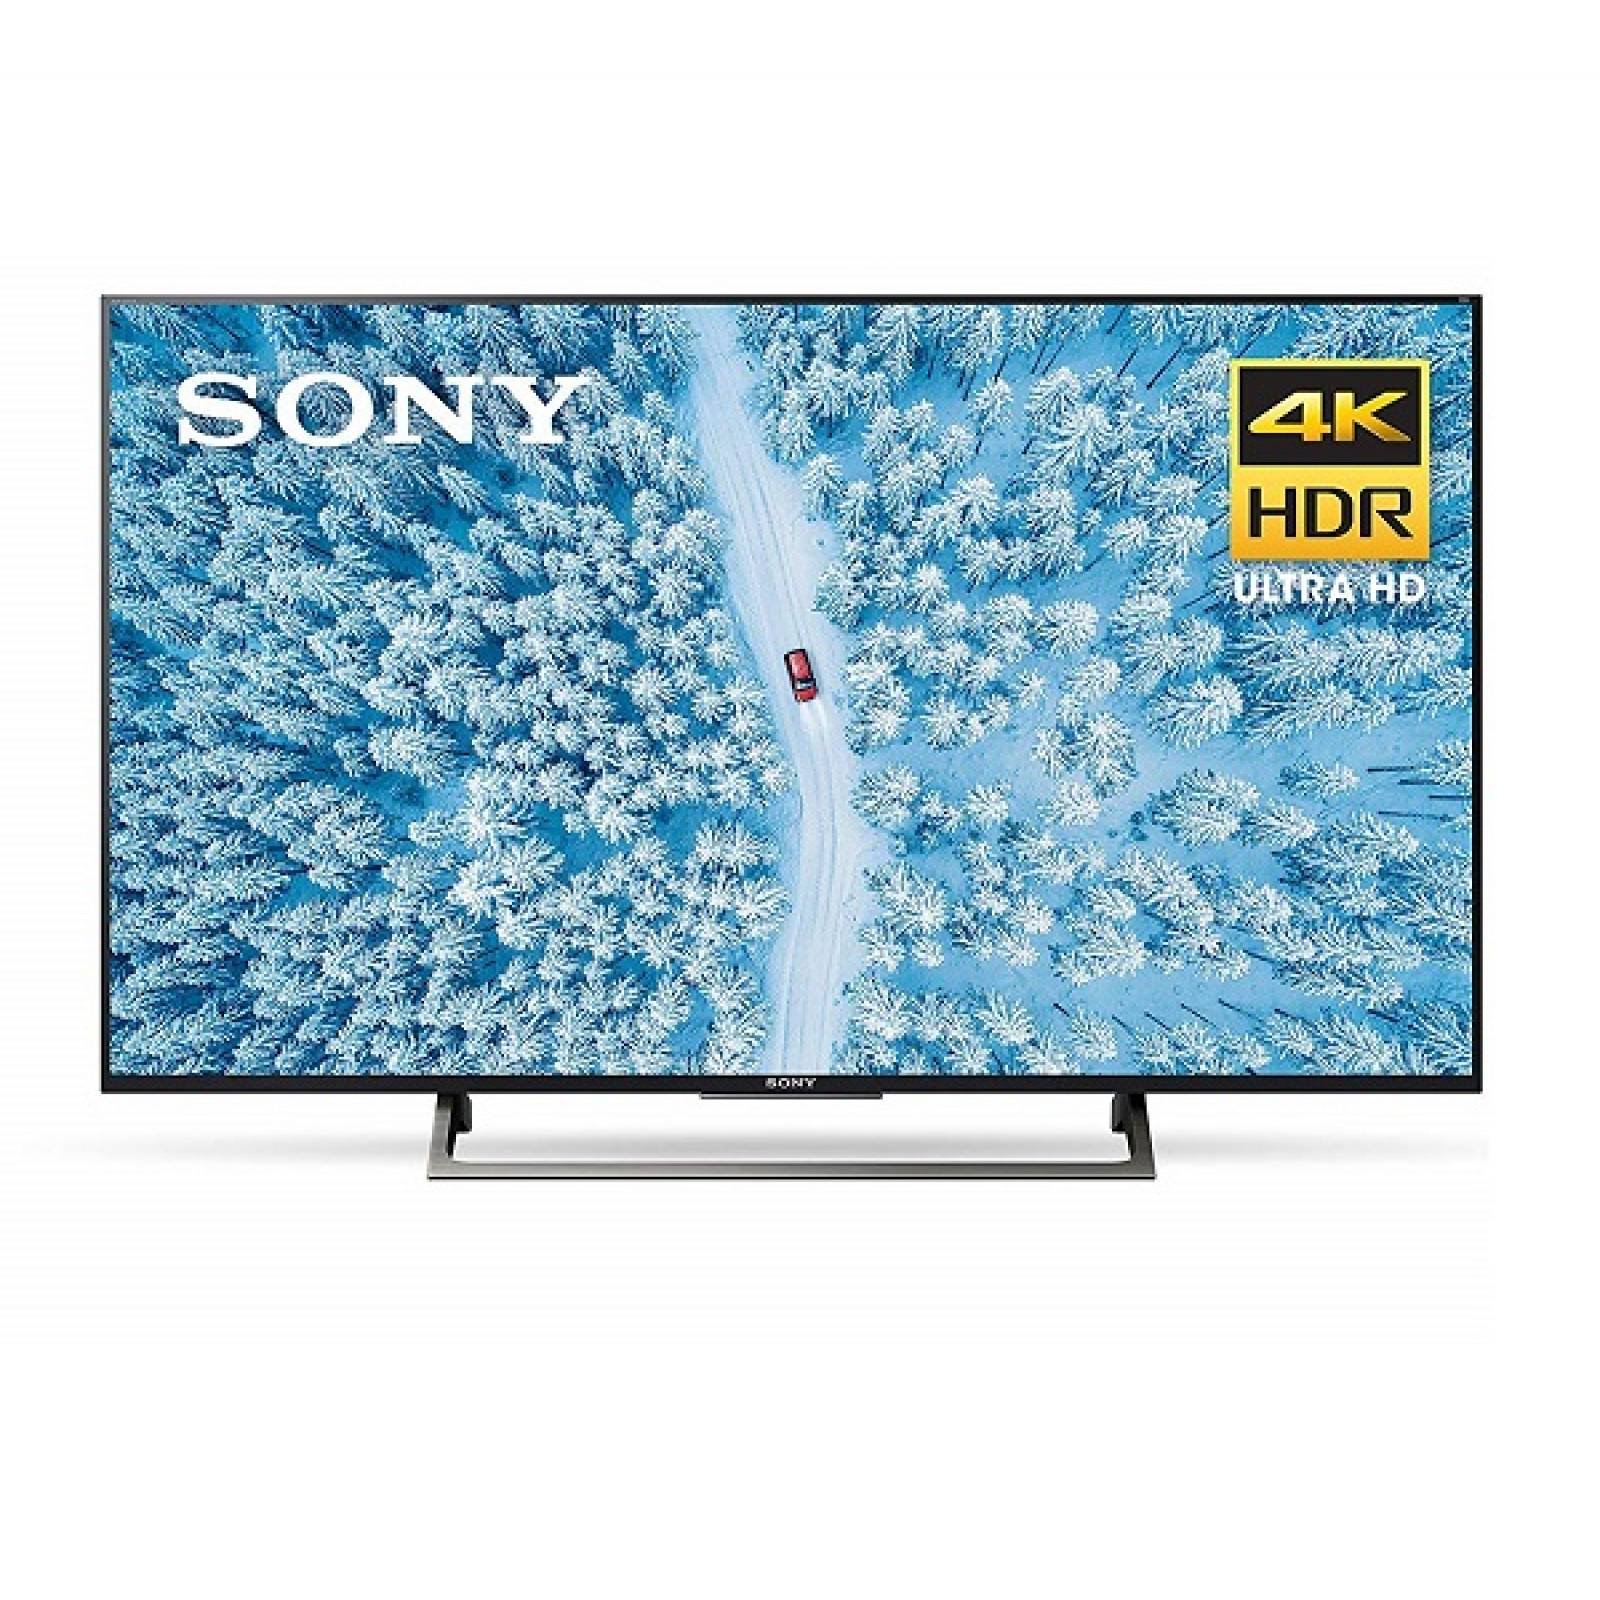 Smart TV Sony 49 4K HDR UHD HDMI USB Bluetooth XBR-49X800E - Reacondicionado